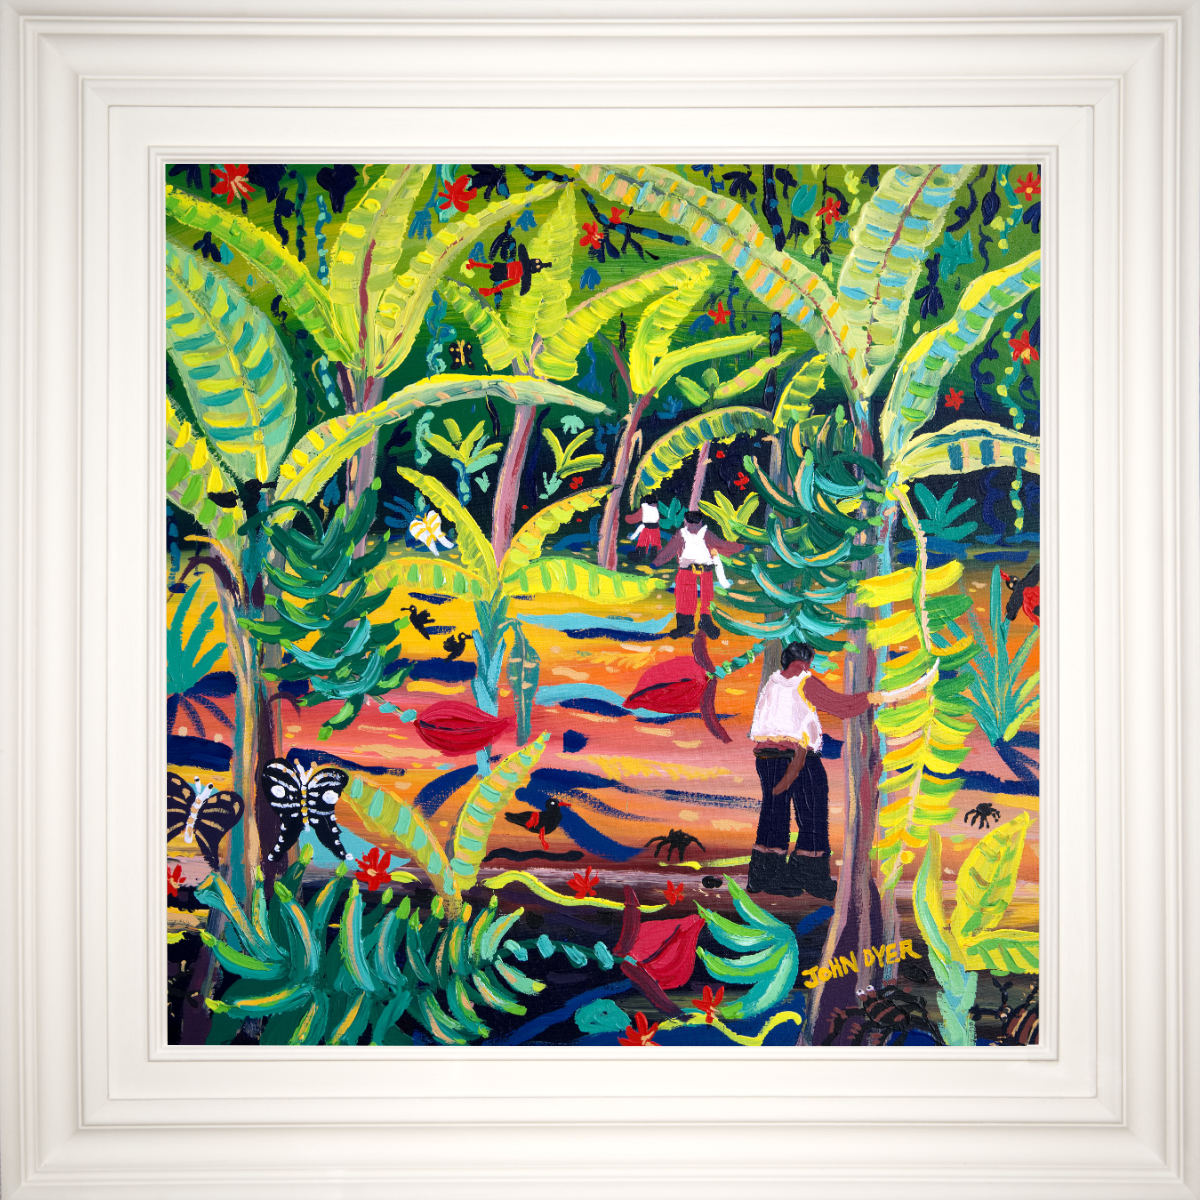 John Dyer Painting. &#39;Jungle Bananas, Costa Rica&#39;. Caribbean Art Gallery.